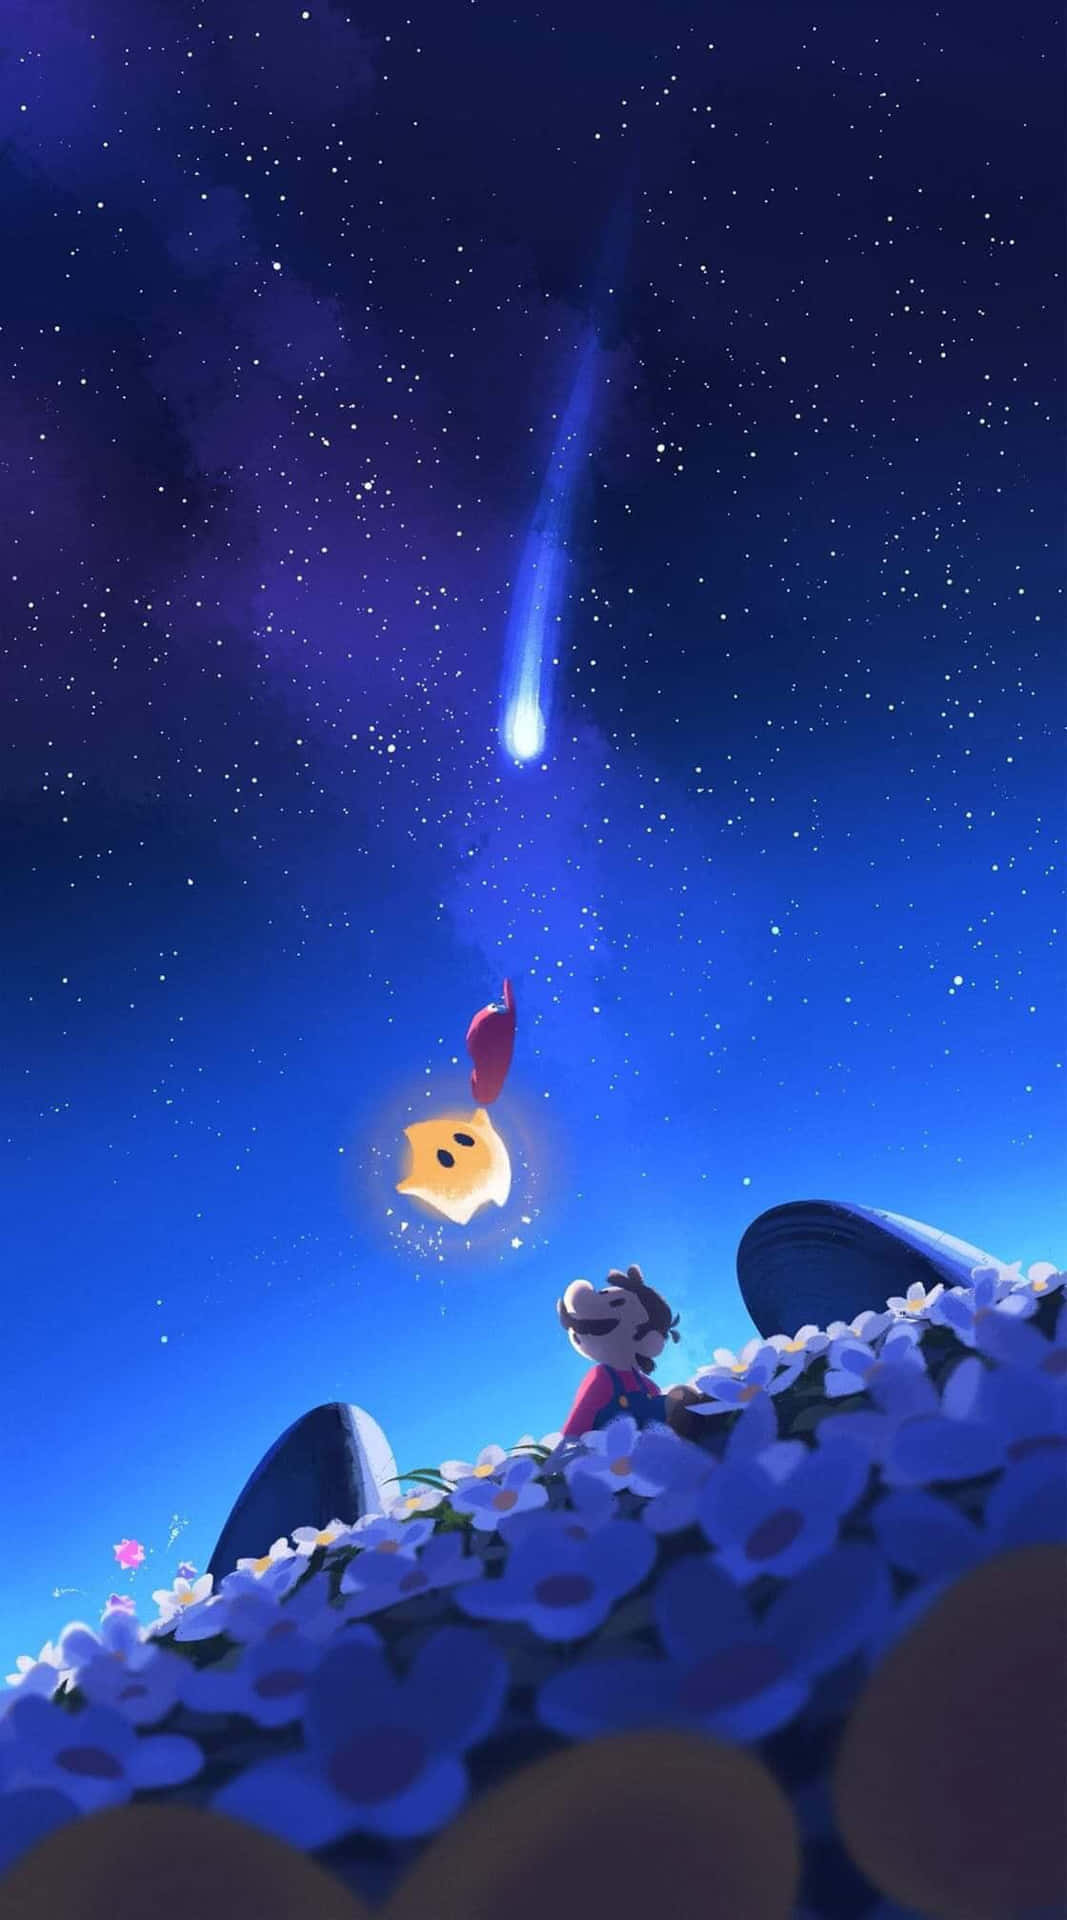 Starry Night Wishand Comet Wallpaper